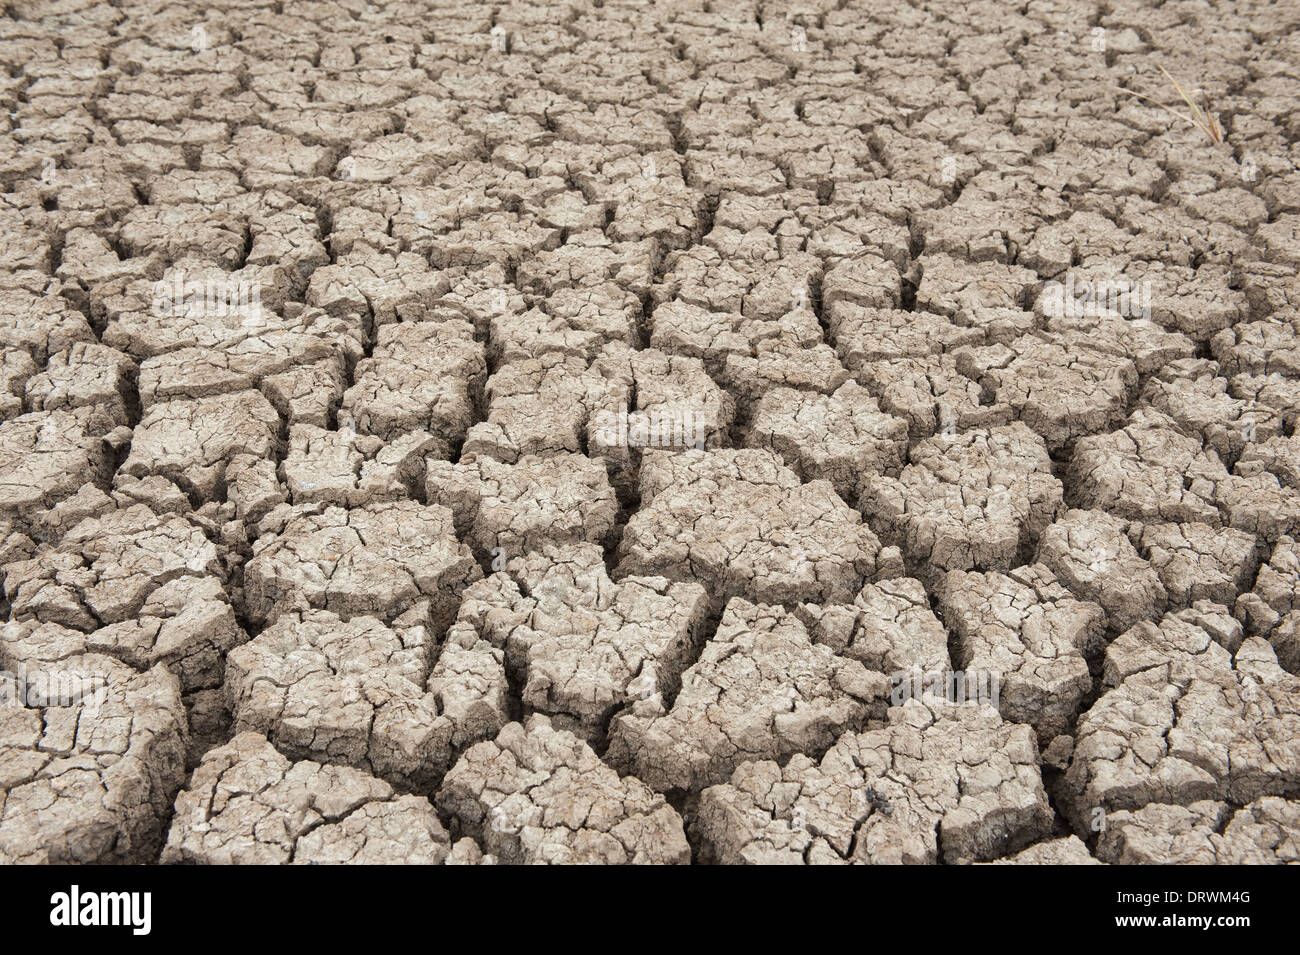 Dry soil texture of a barren land Stock Photo